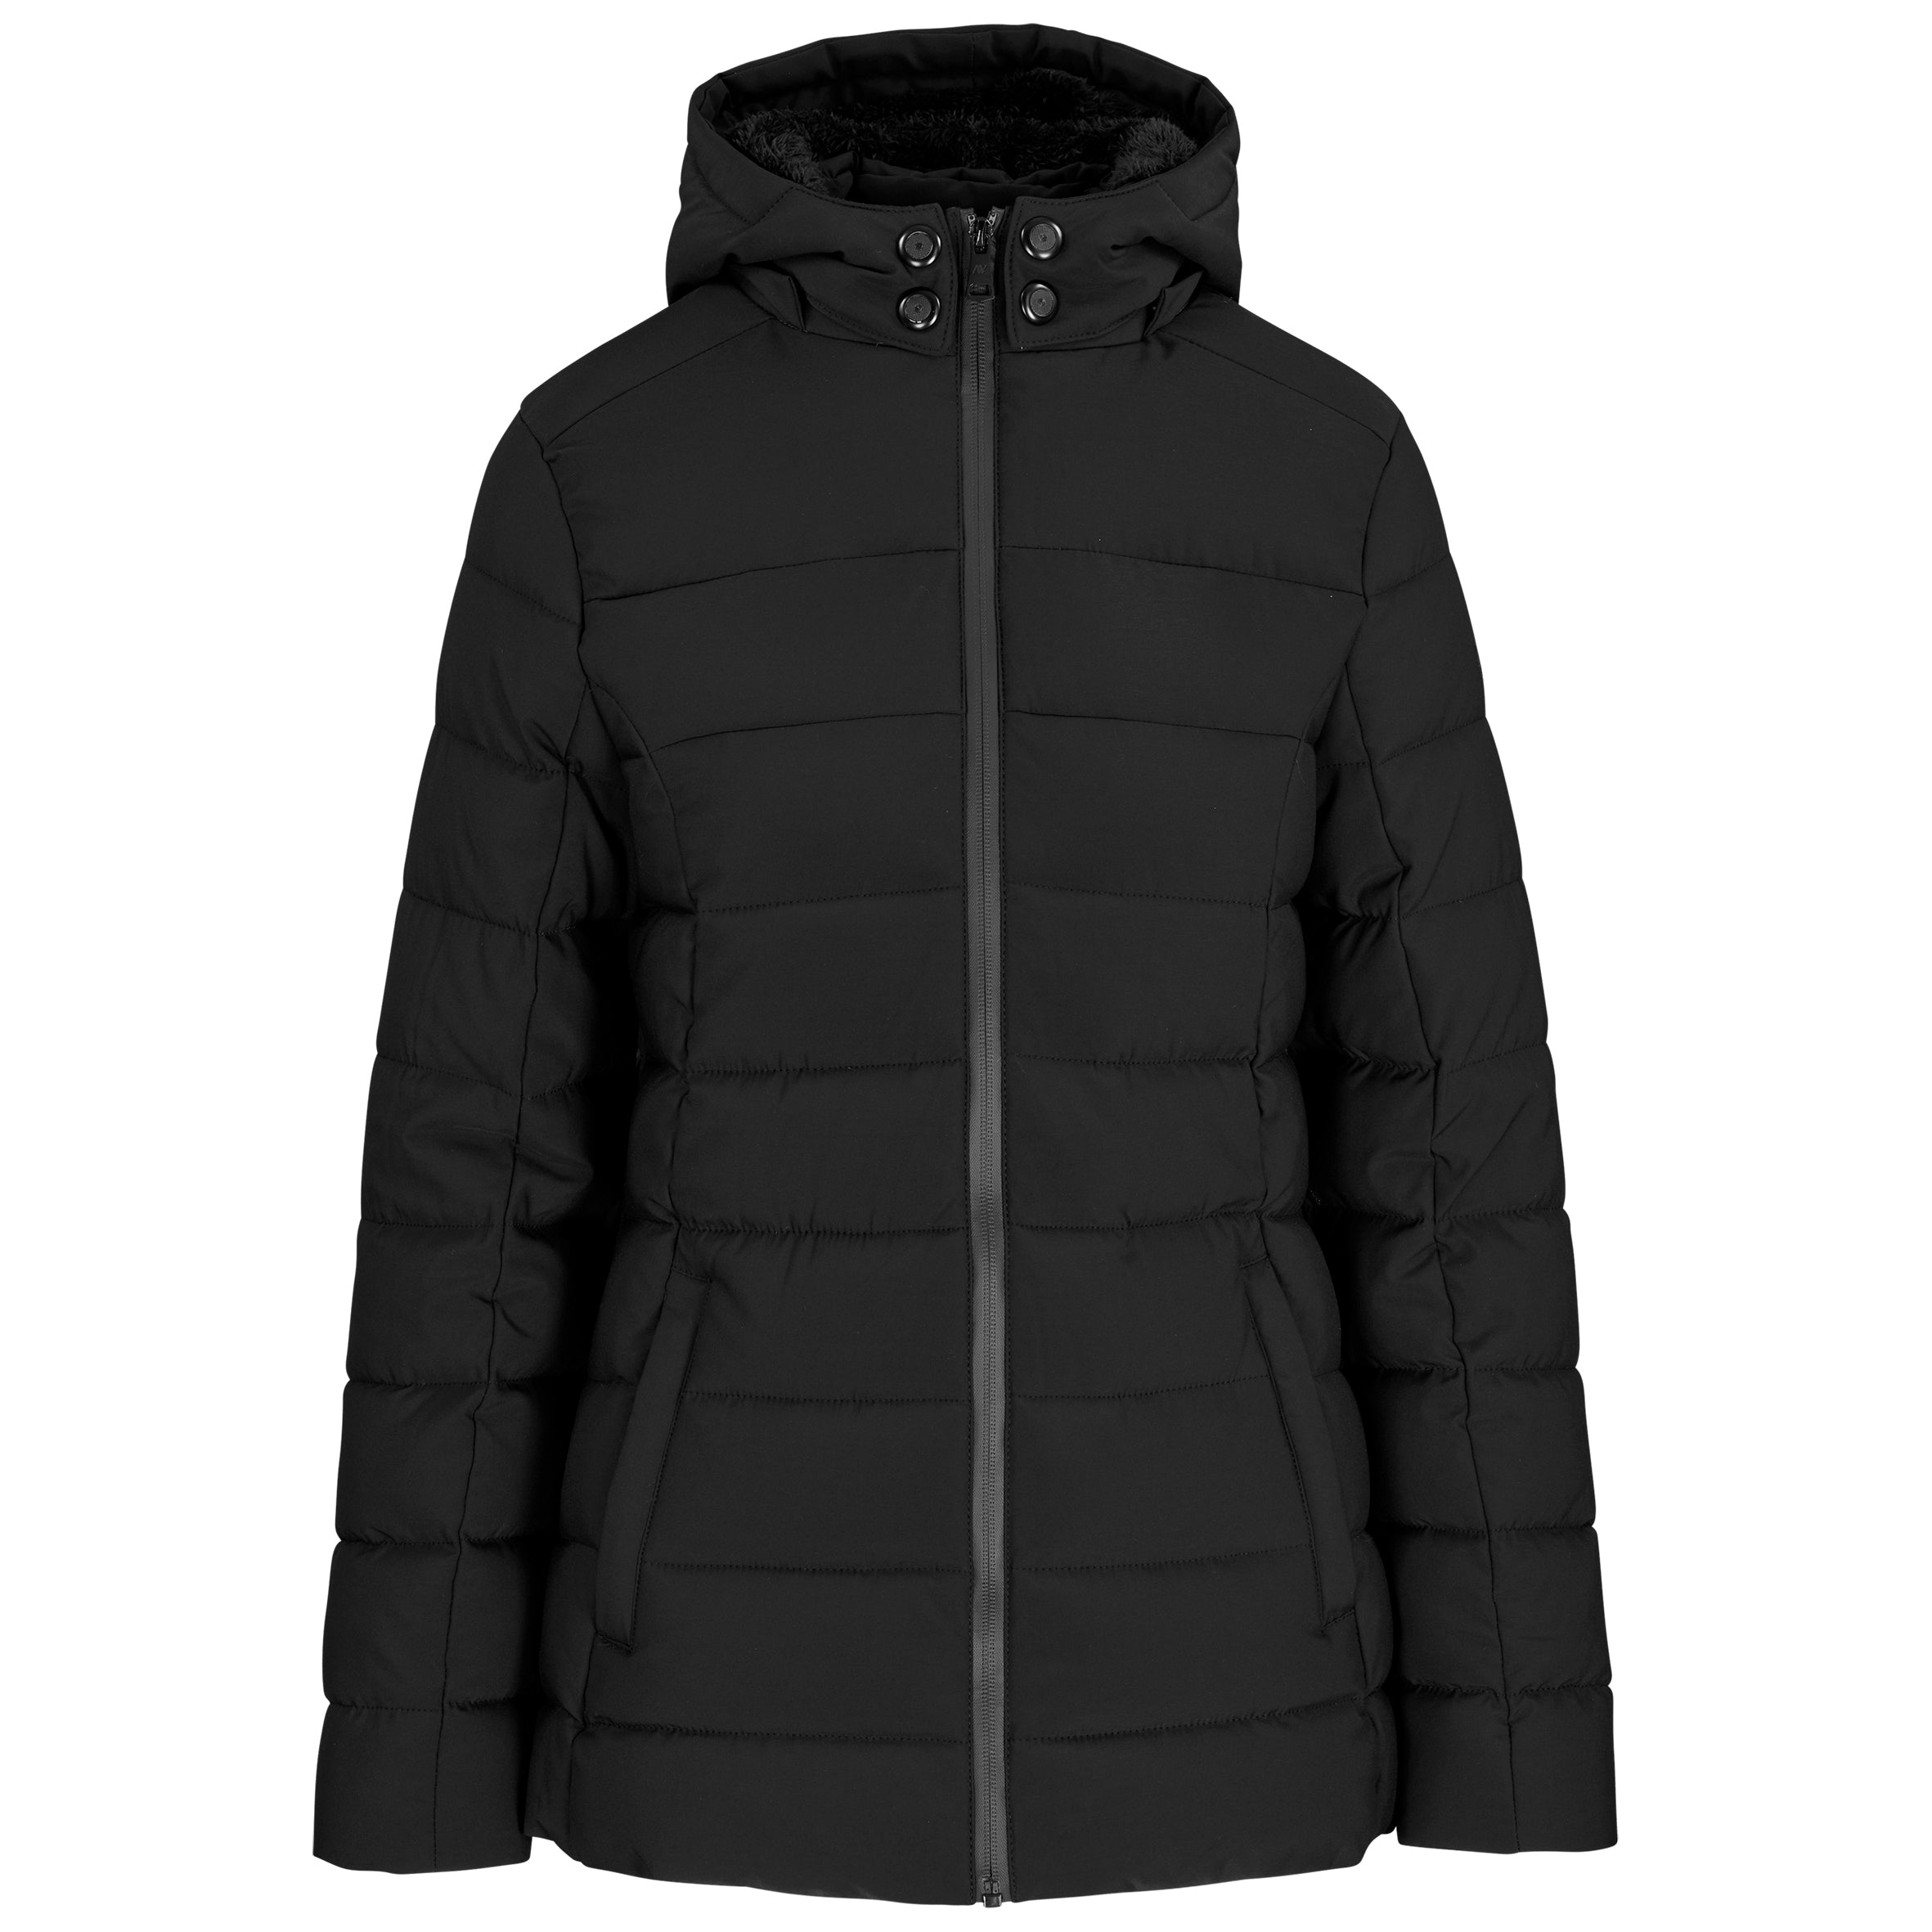 Ladies Iveroc Jacket 2XL / Black / BL